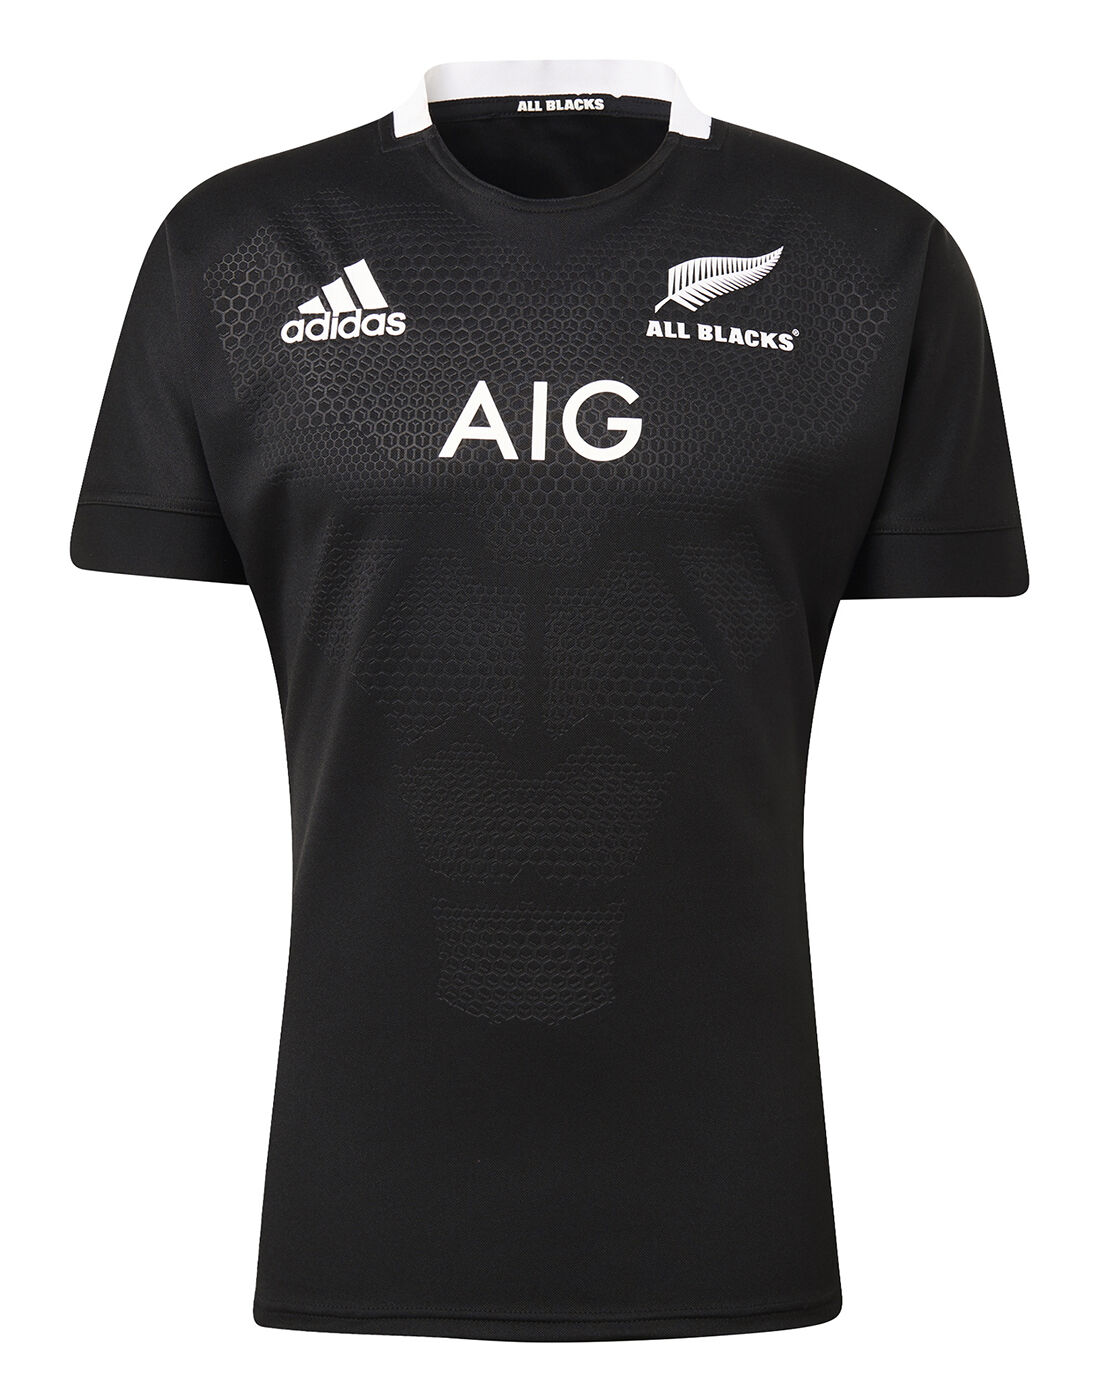 All Blacks Home Rugby Shirt 2019/20 